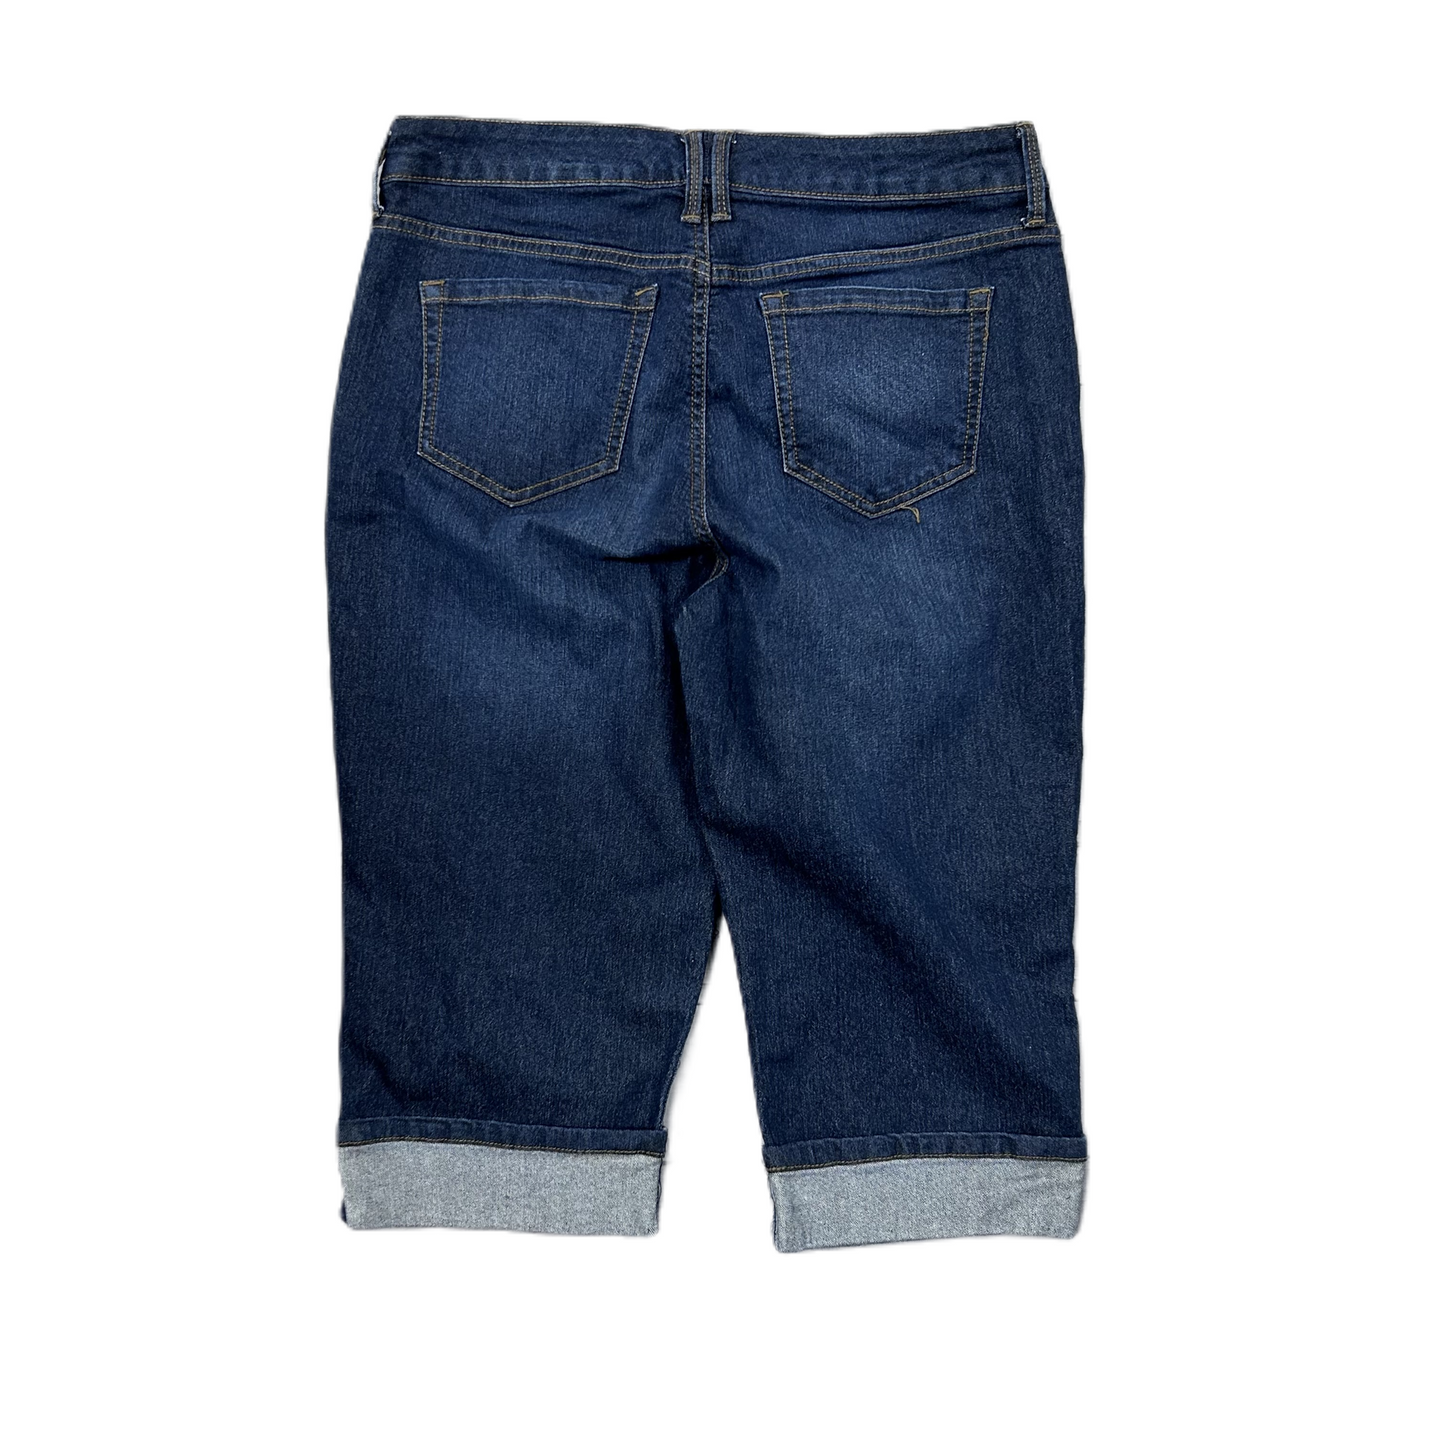 Jeans Cropped By Gloria Vanderbilt  Size: 10petite